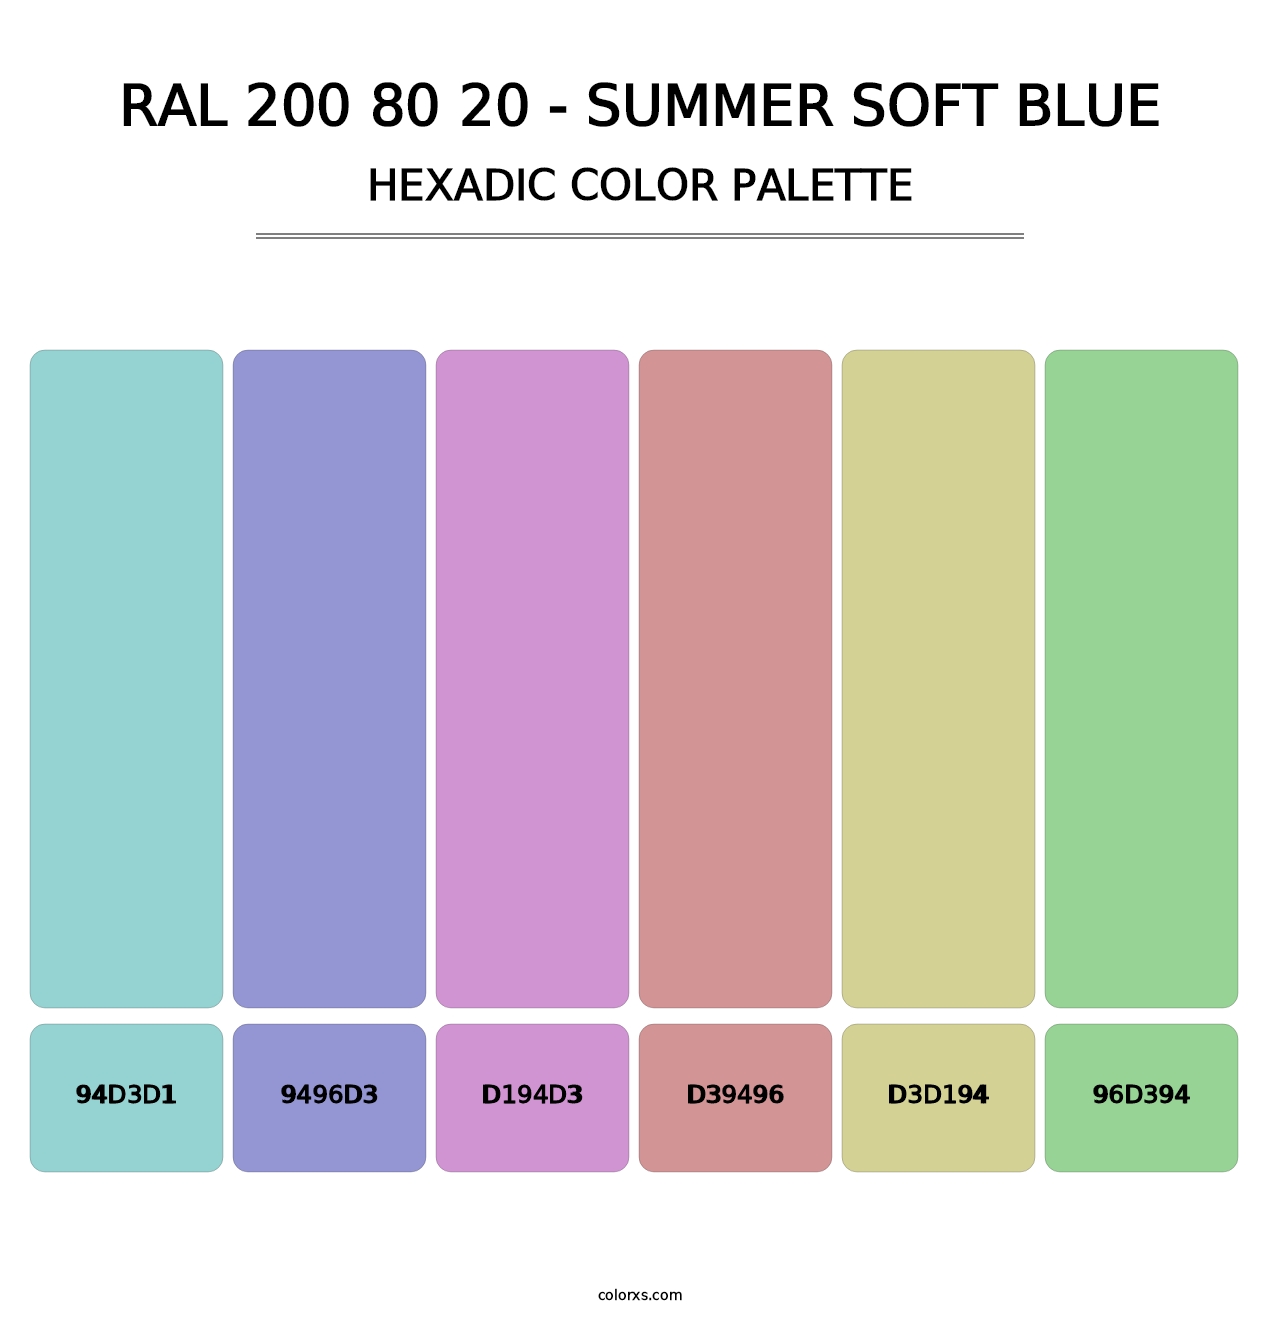 RAL 200 80 20 - Summer Soft Blue - Hexadic Color Palette